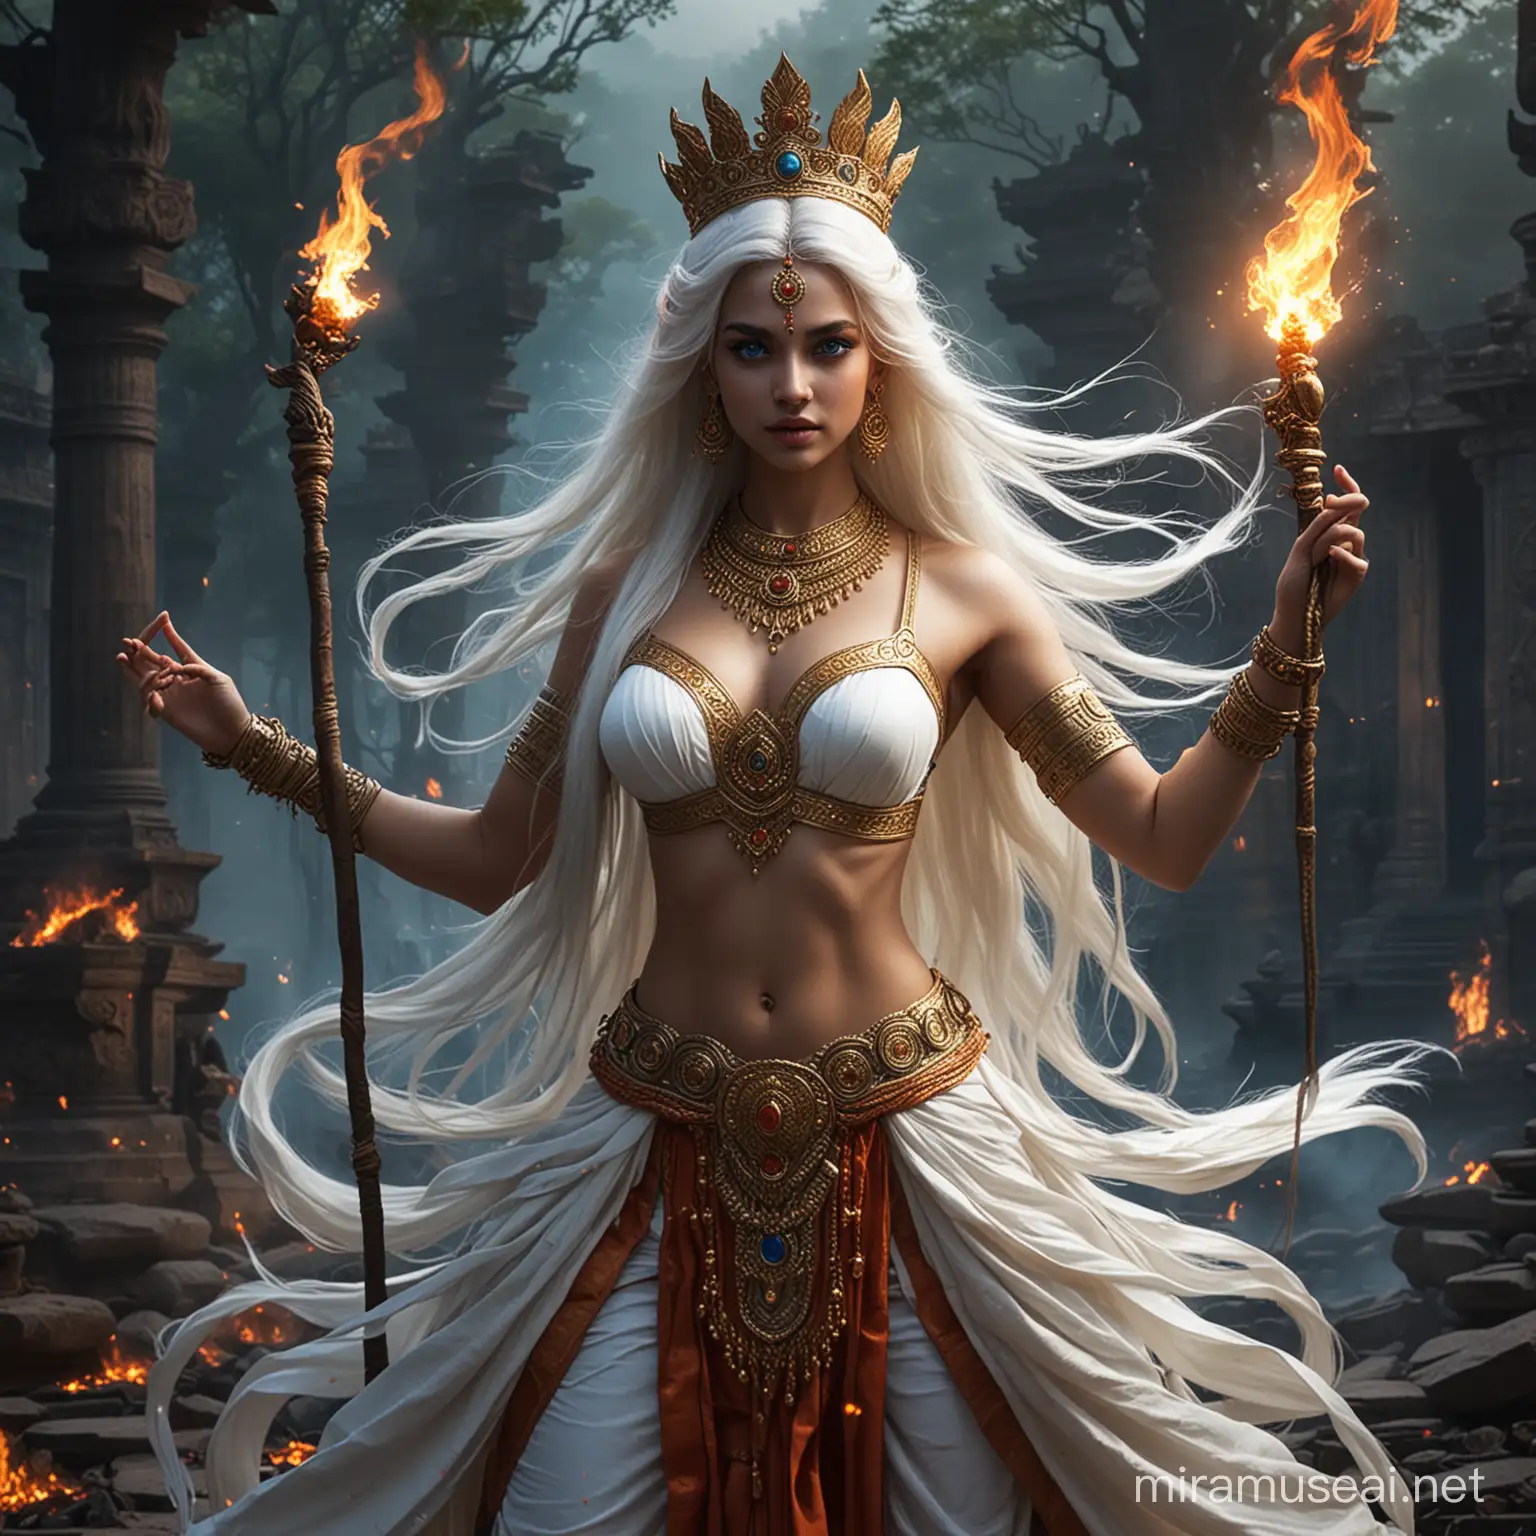 Powerful Hindu Empress Goddess in Fiery Combat Amidst Dark Valley